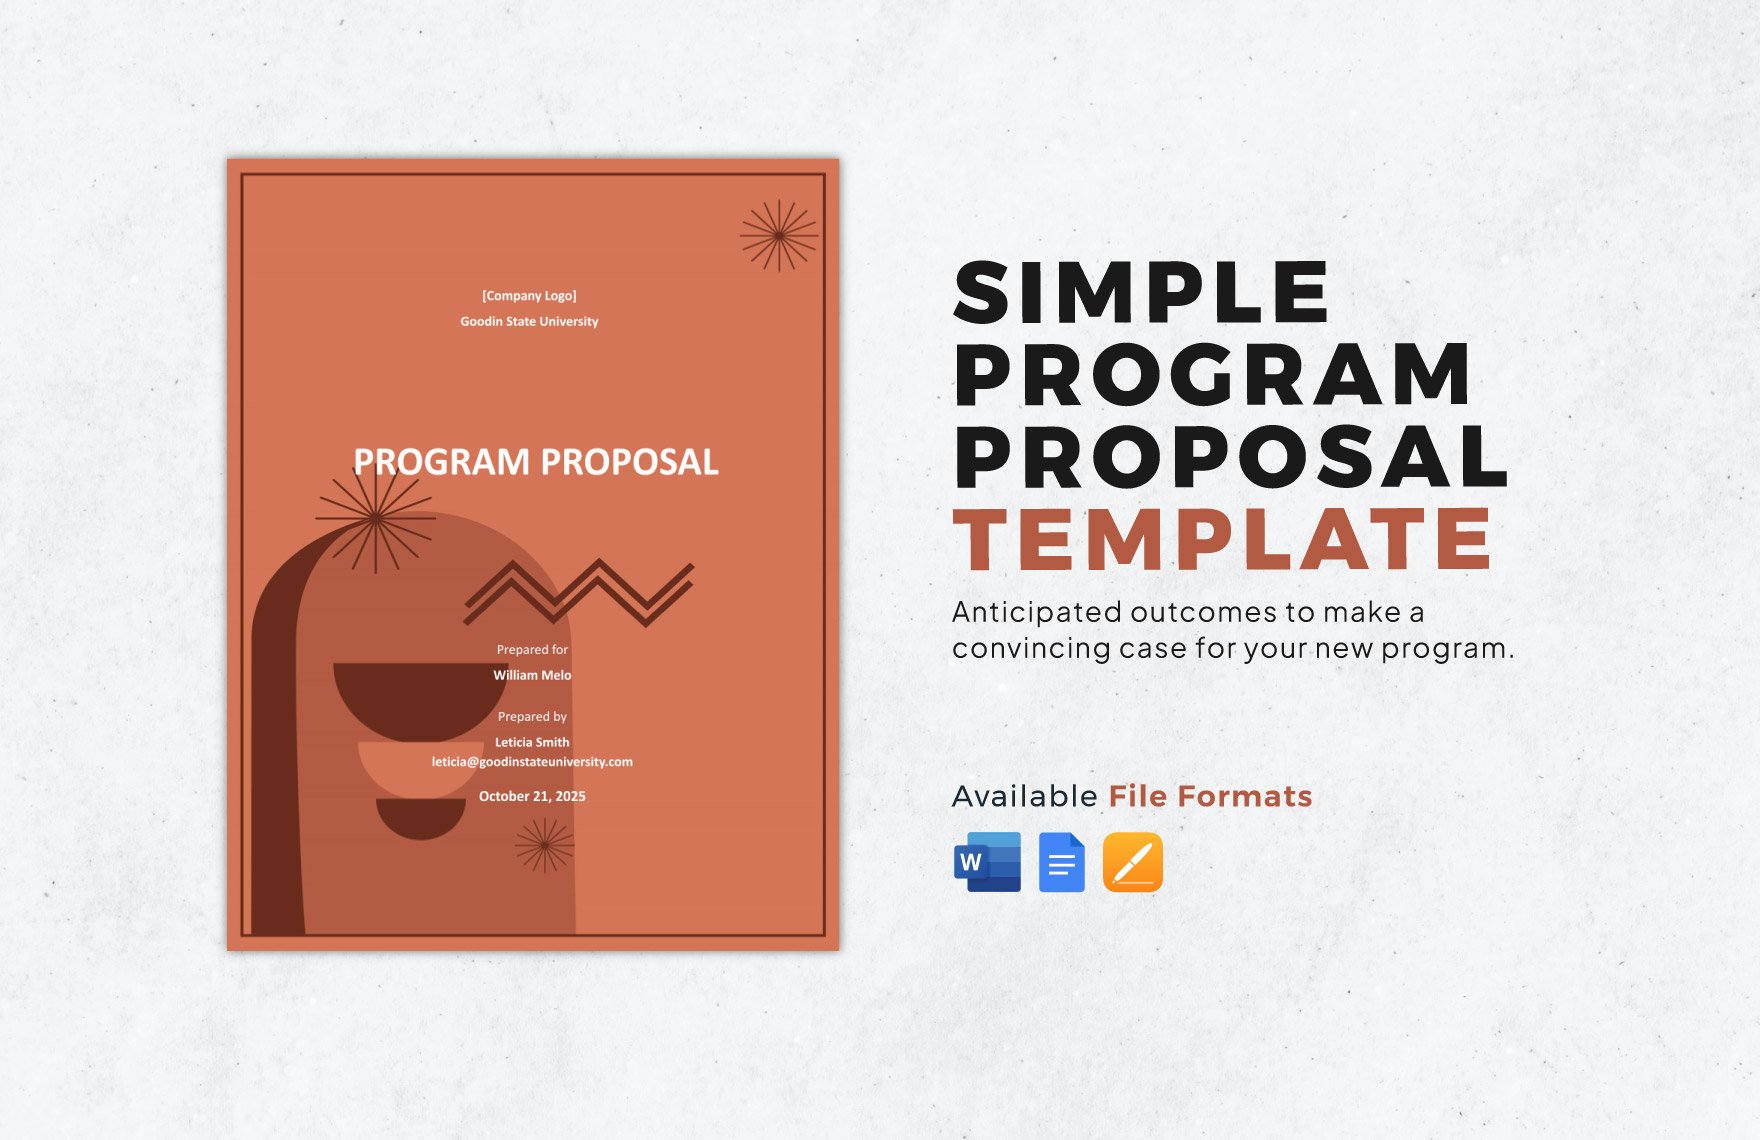 Simple Program Proposal Template